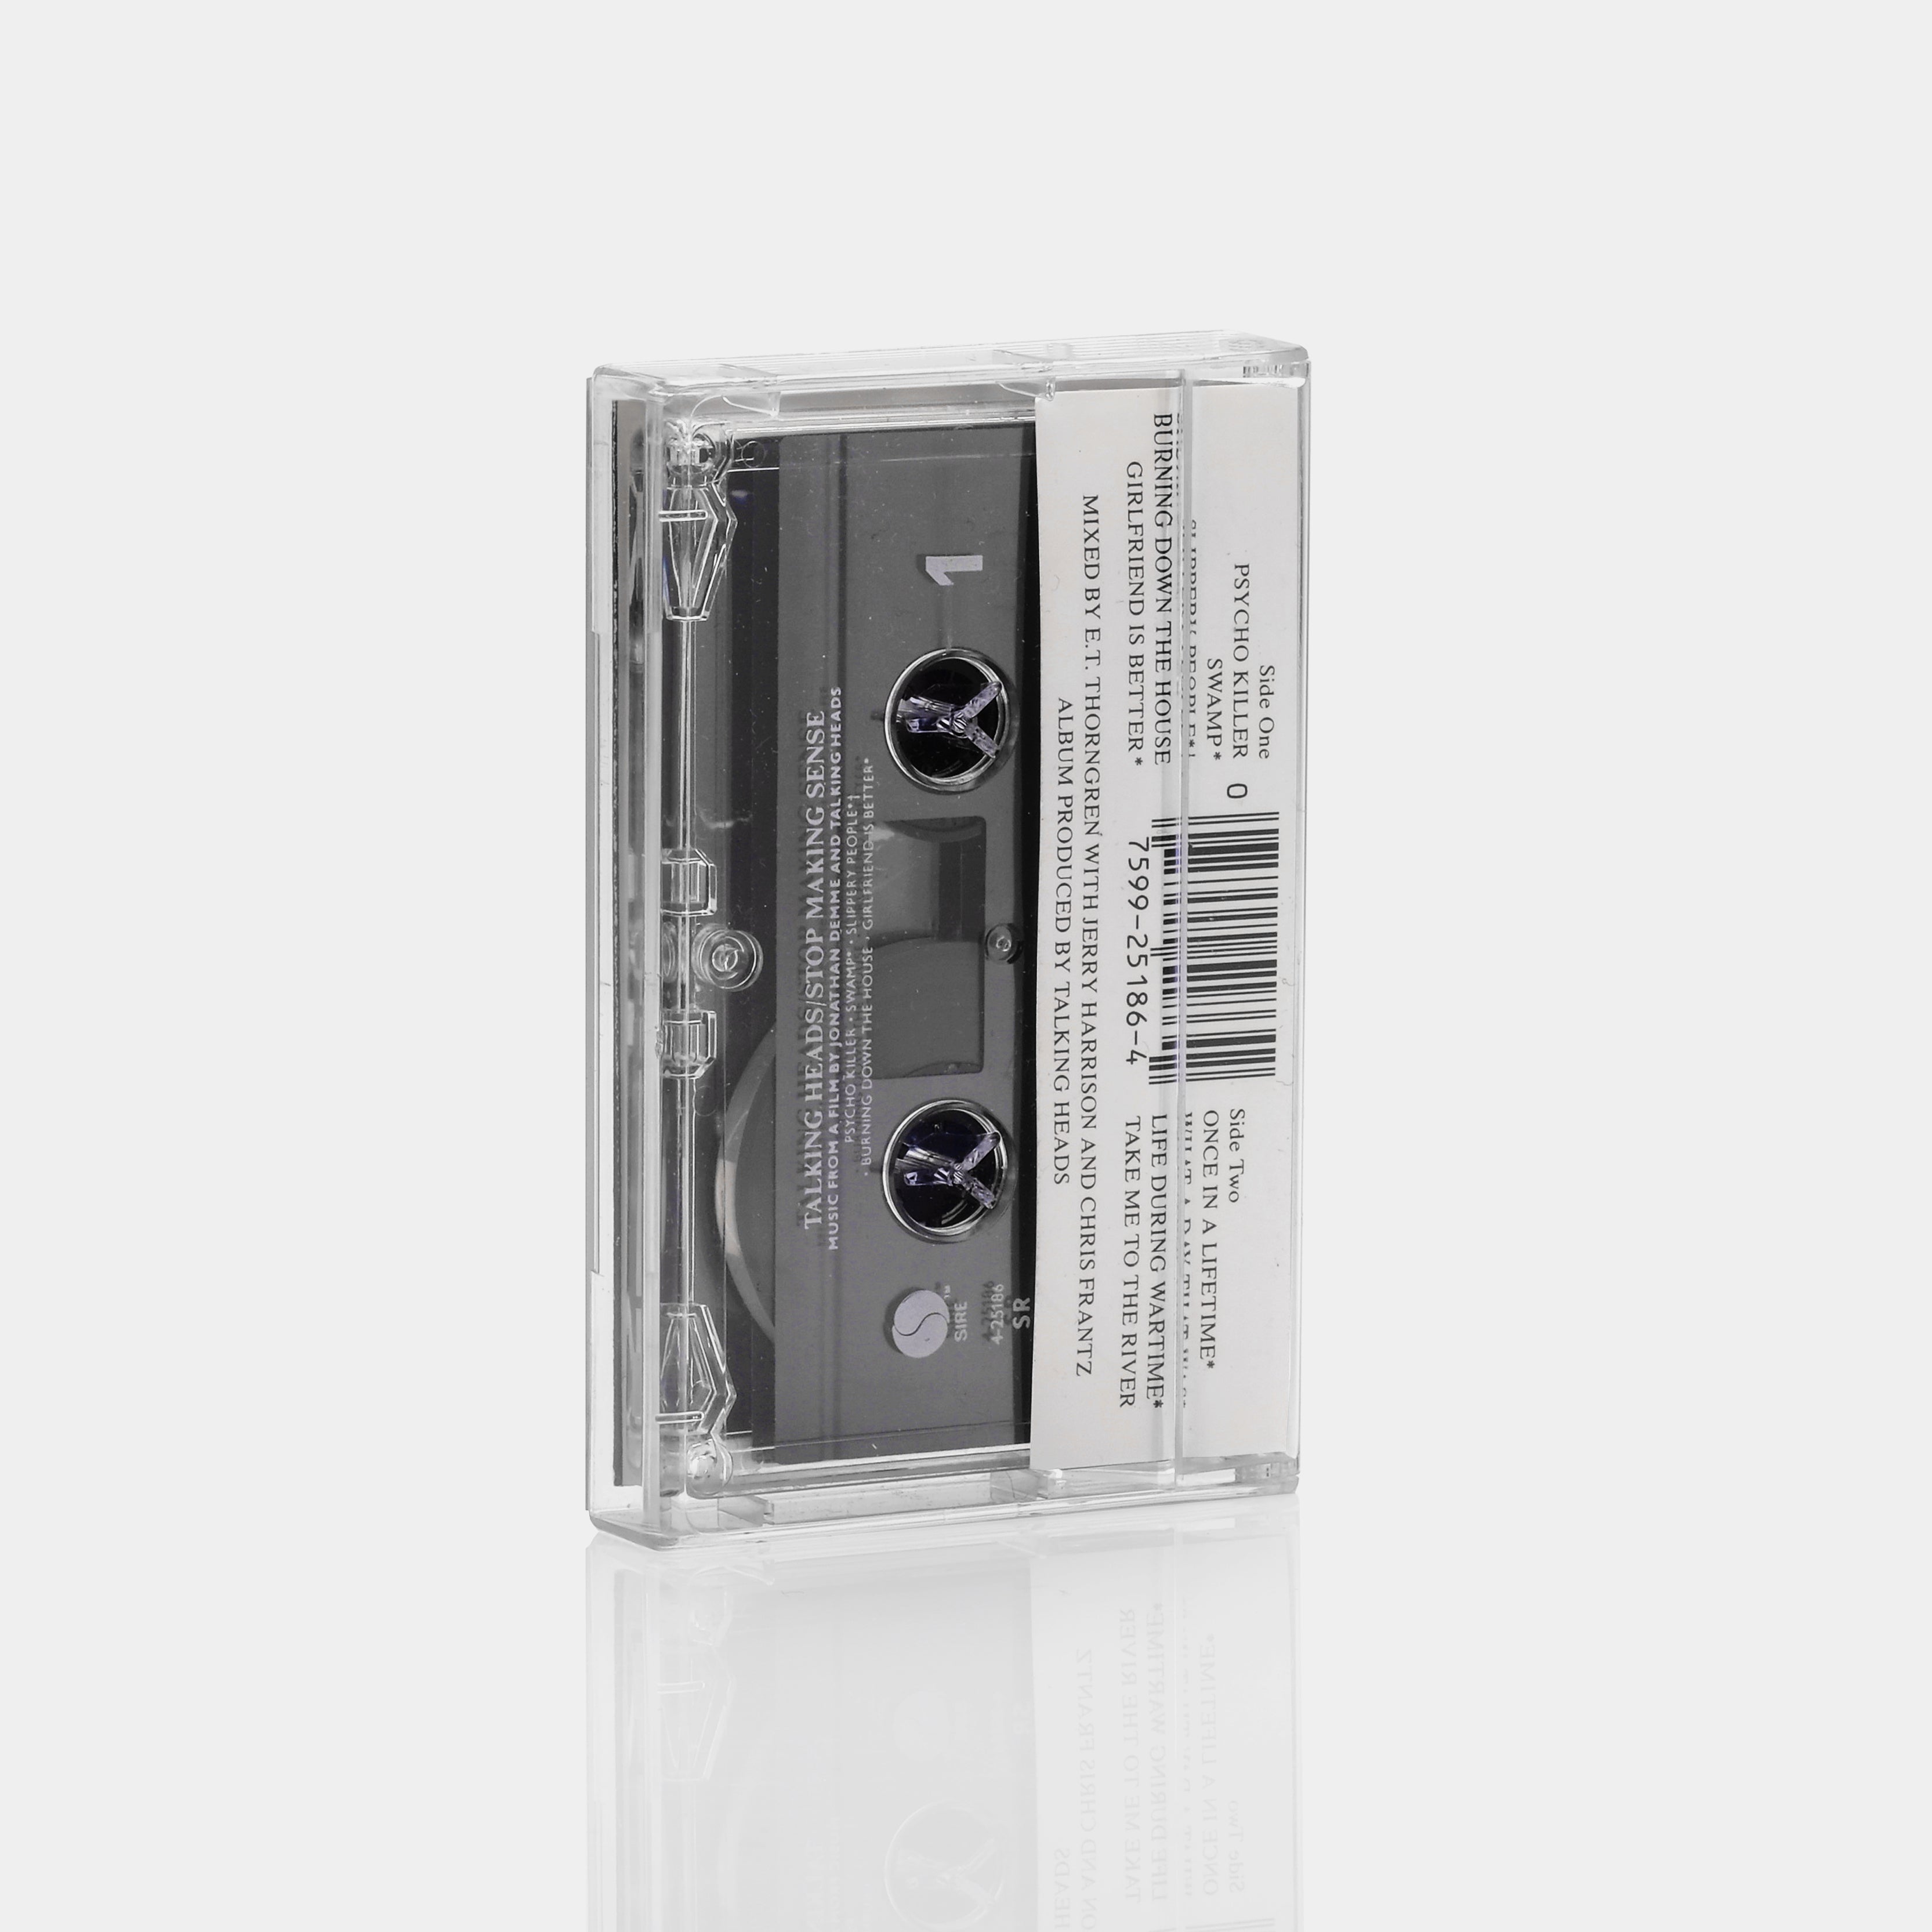 Talking Heads - Stop Making Sense Cassette Tape